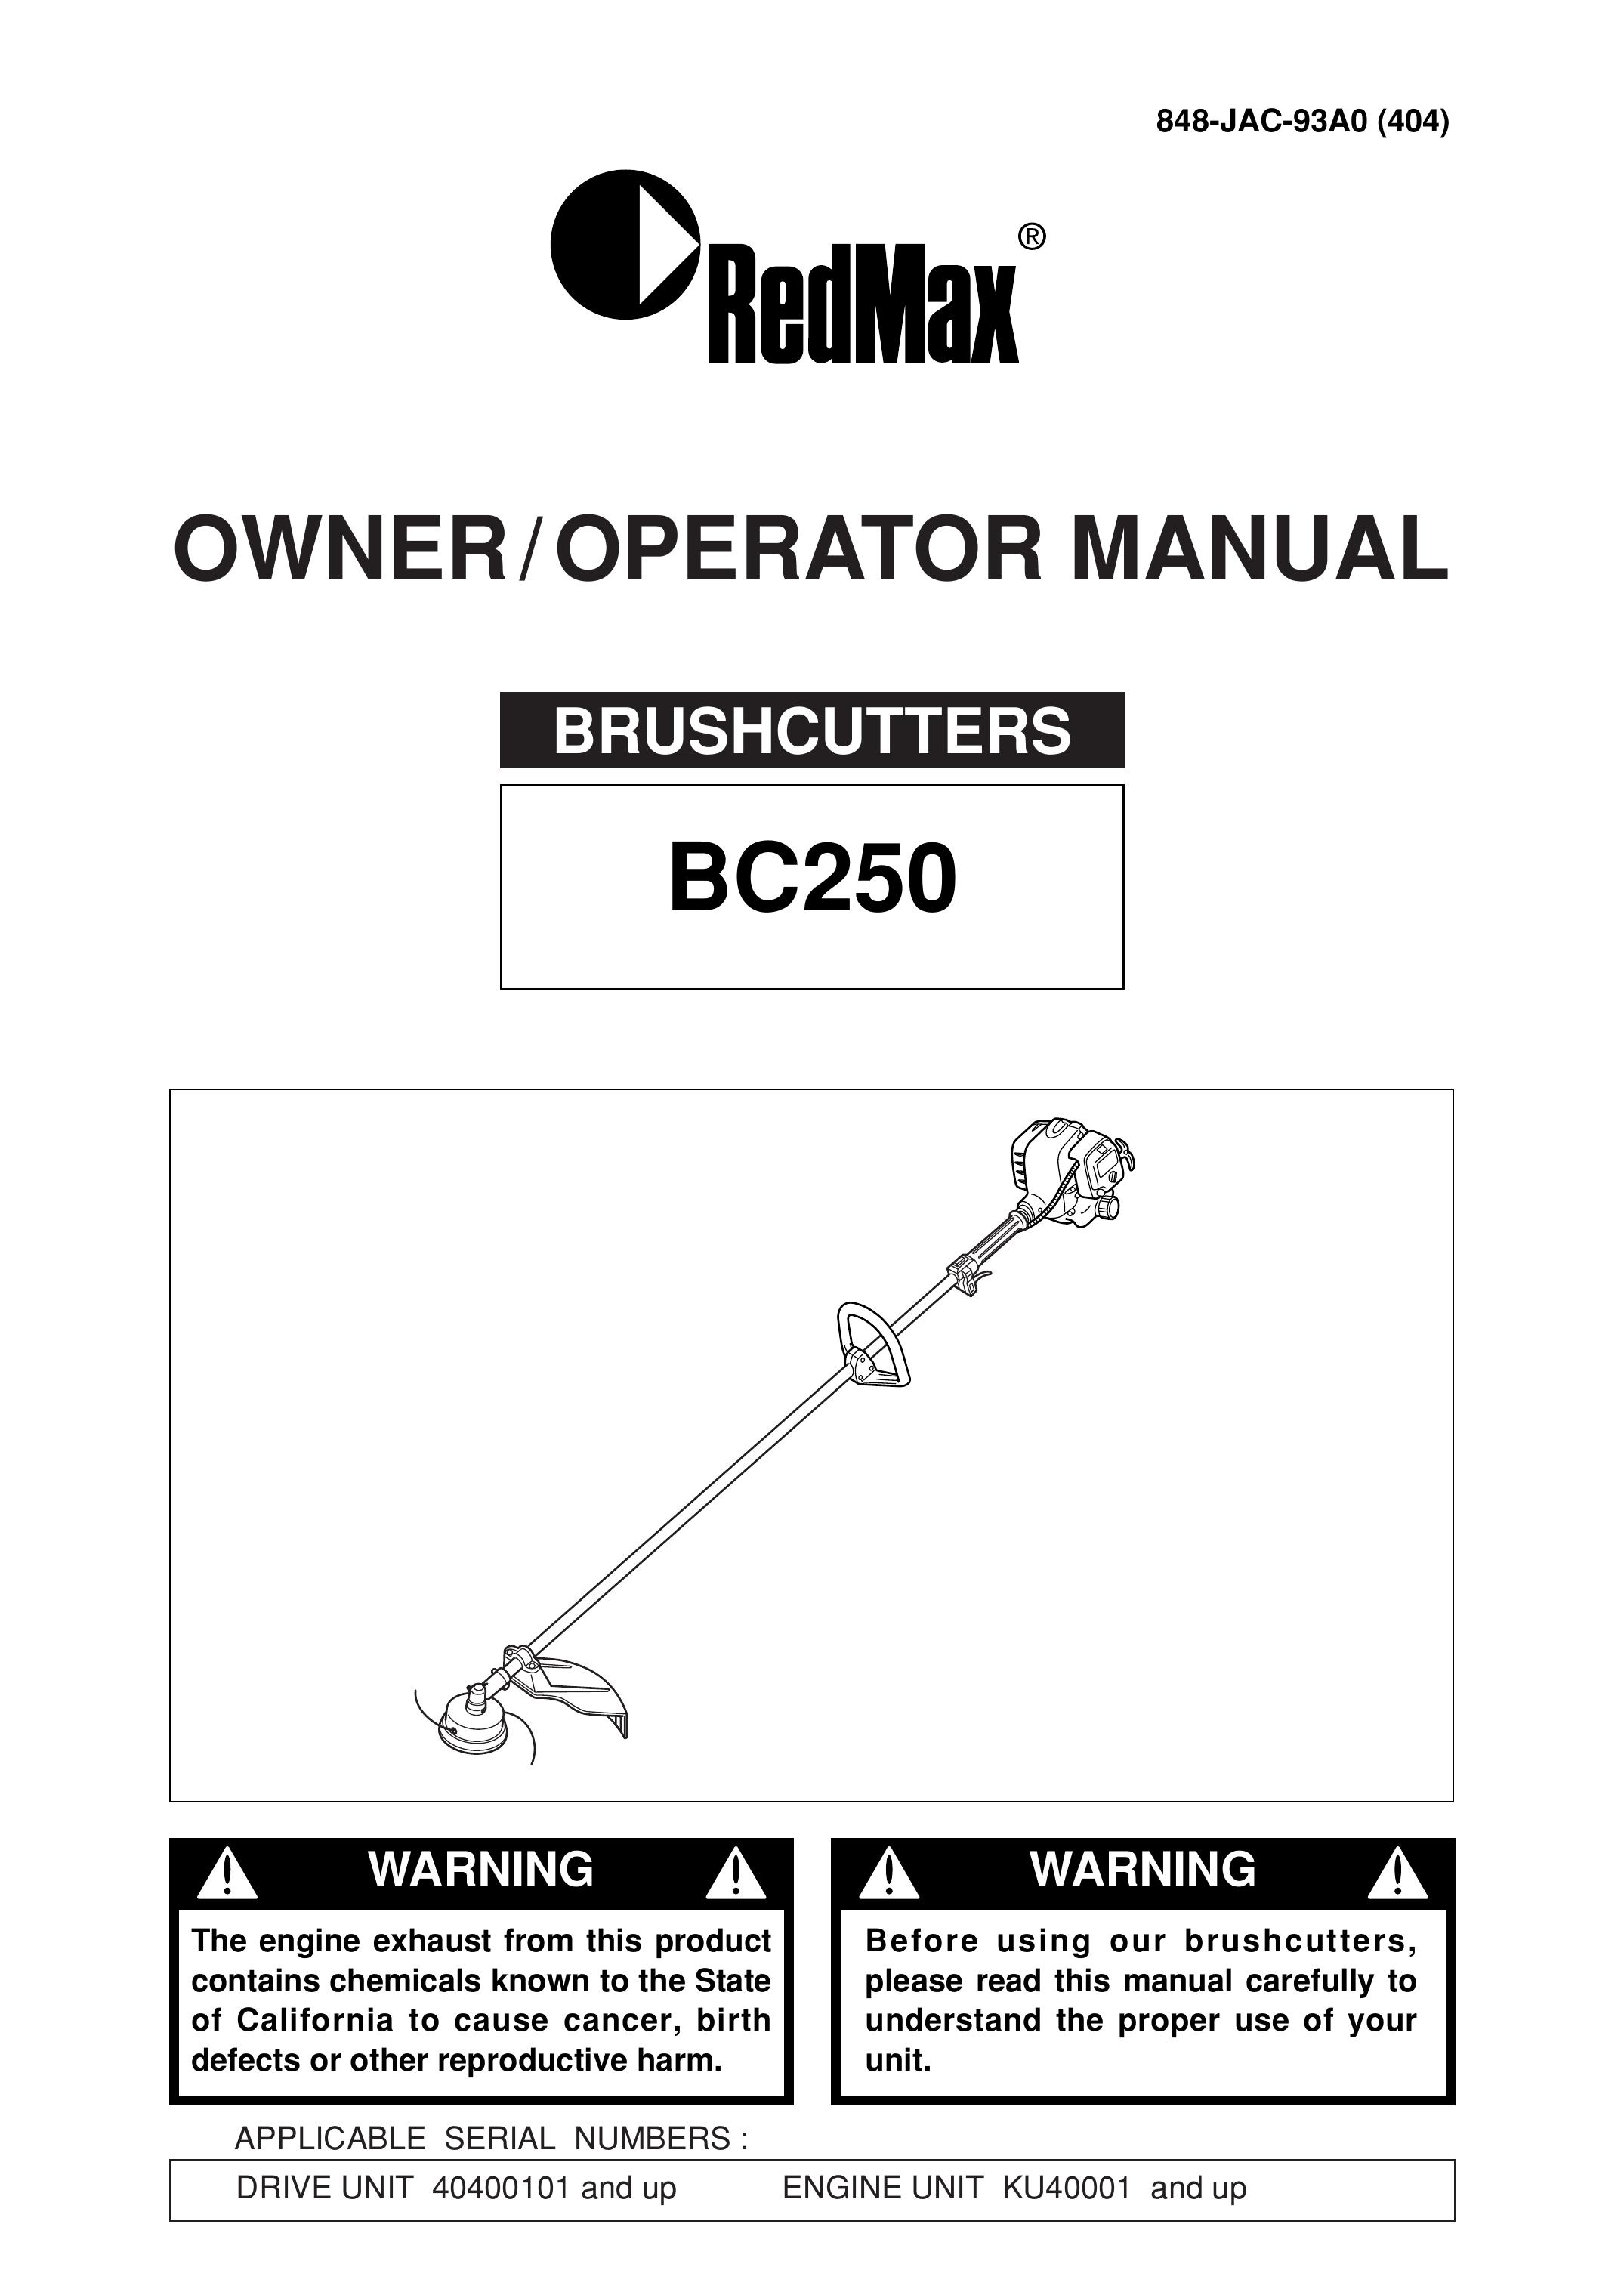 RedMax BC250 Brush Cutter User Manual